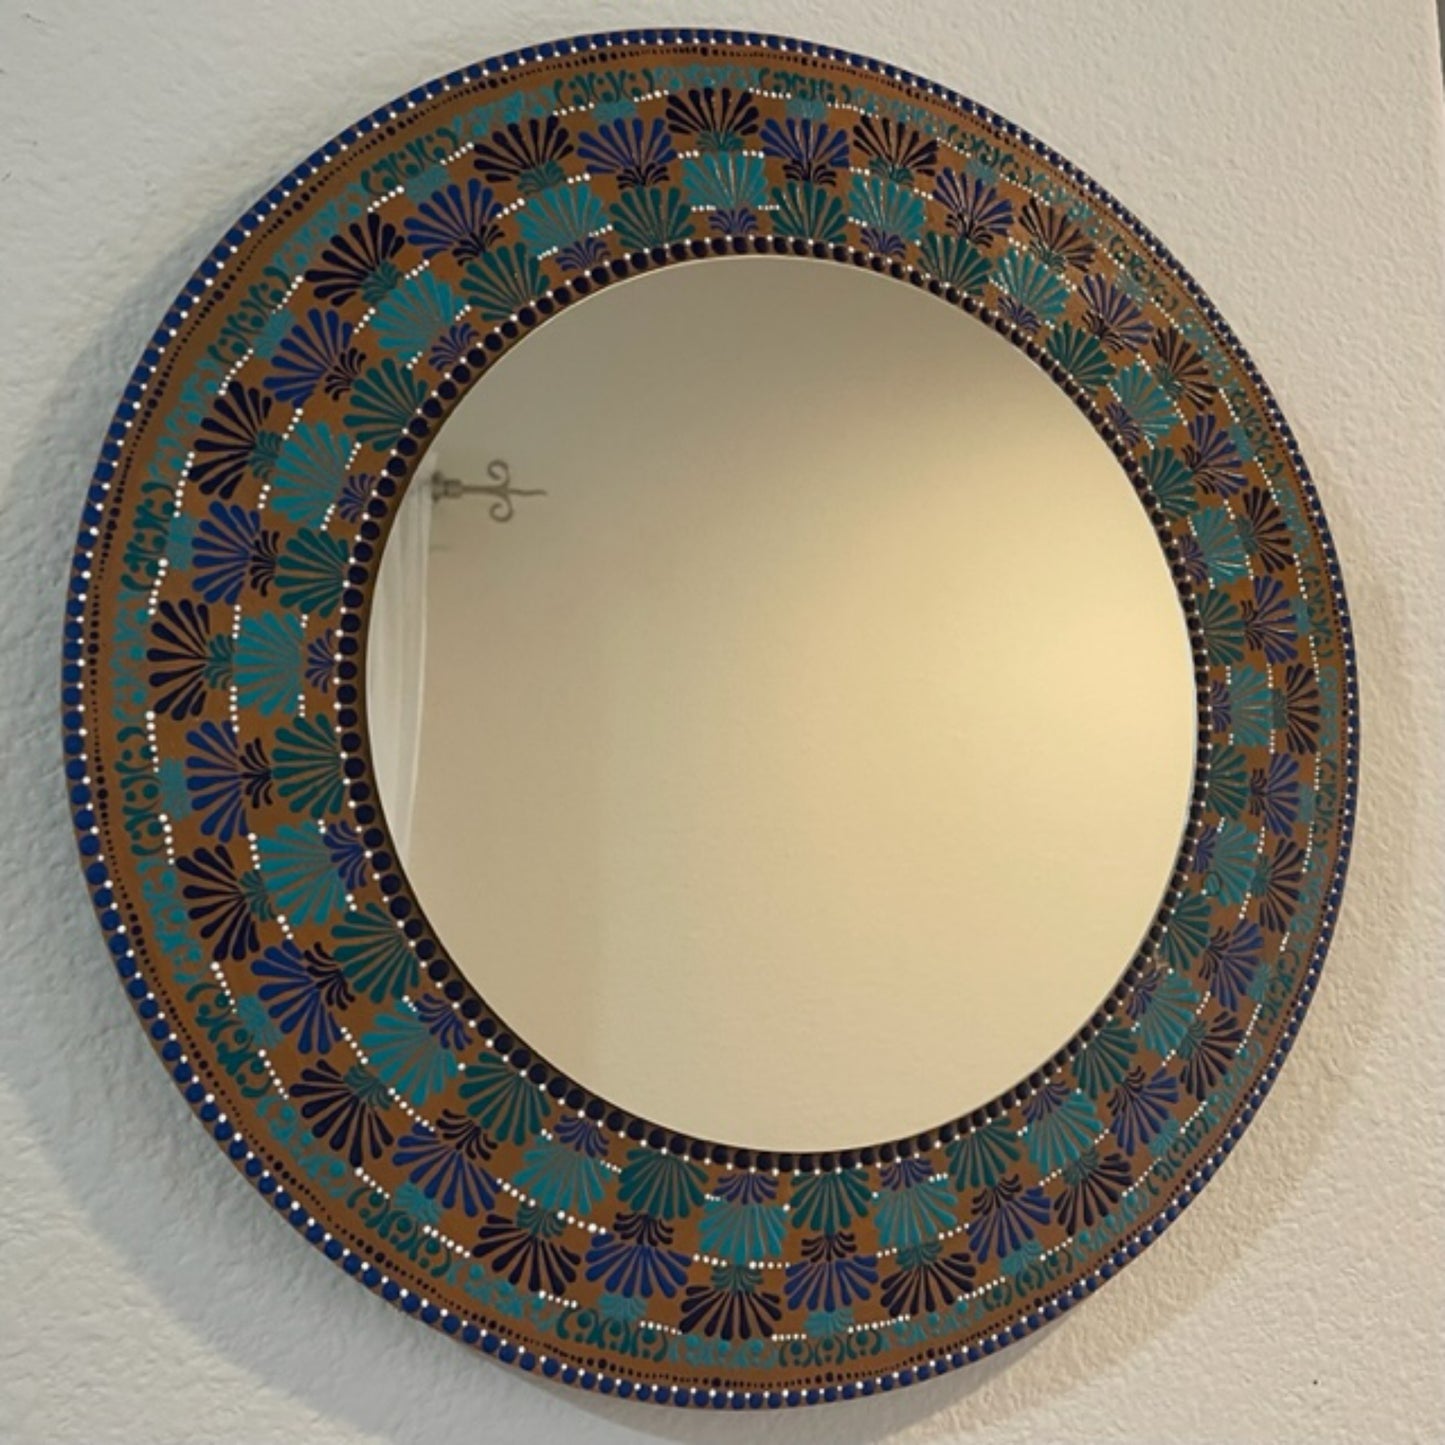 Wall Mirror Dot Art Mandala with Shades of Blues with White Handmade Acrylic Painting Wall Art Decor